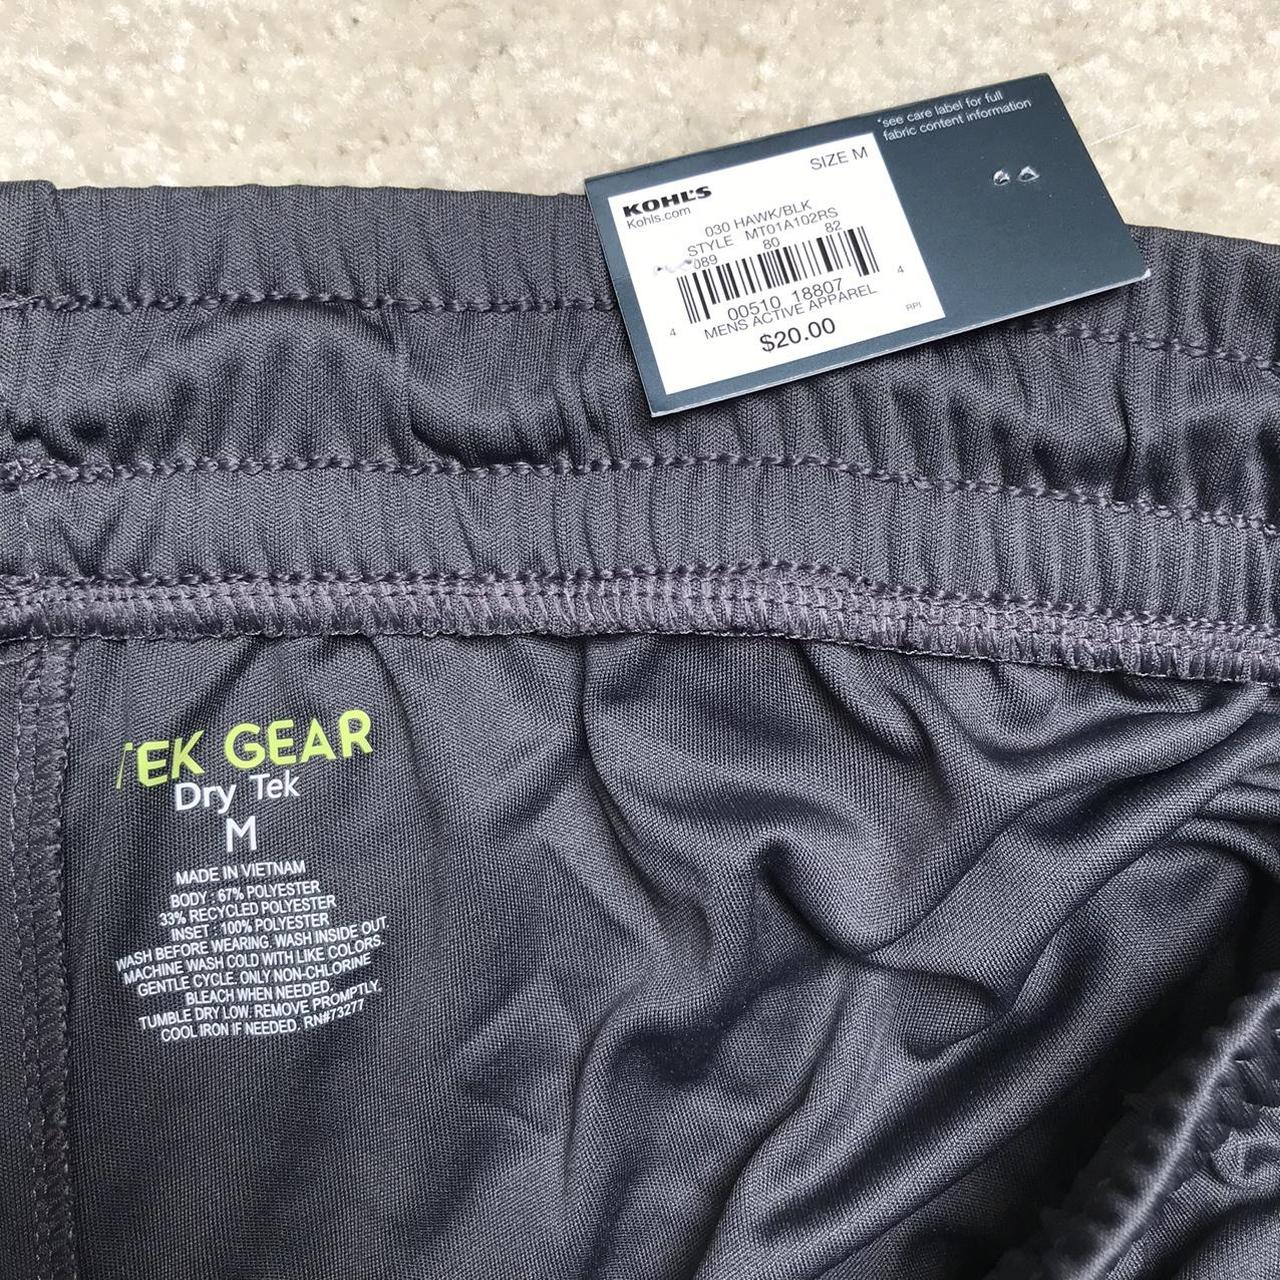 Tek Gear Size M Regular Size Pants for Women for sale